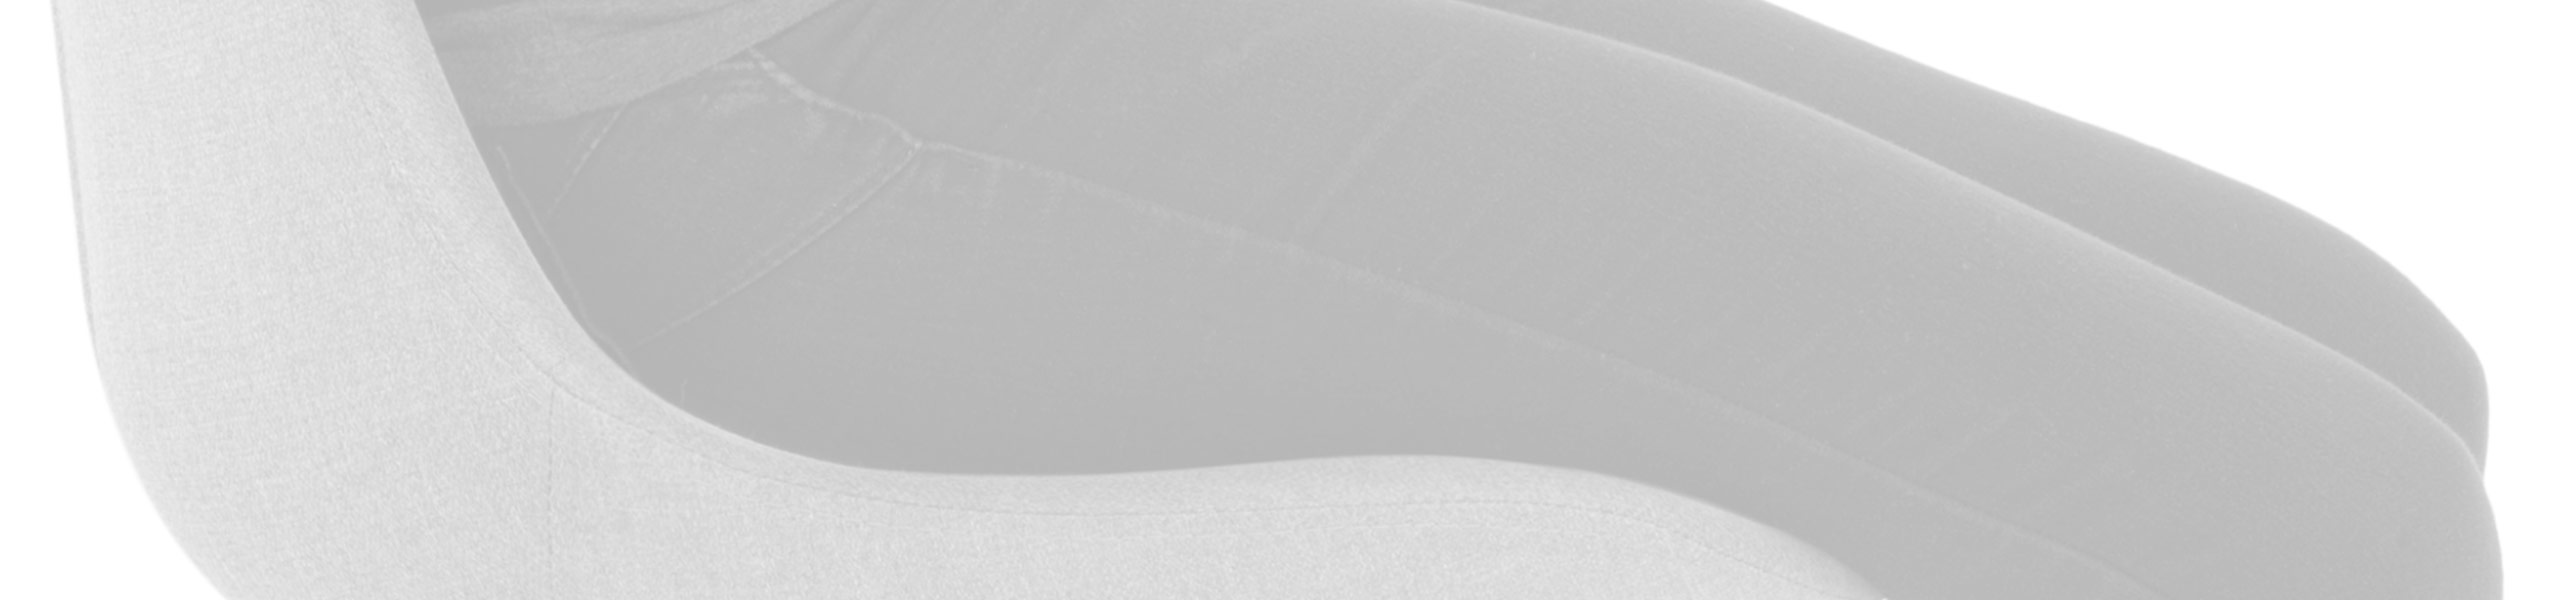 Aero Bar Stool Grey Fabric Review Banner